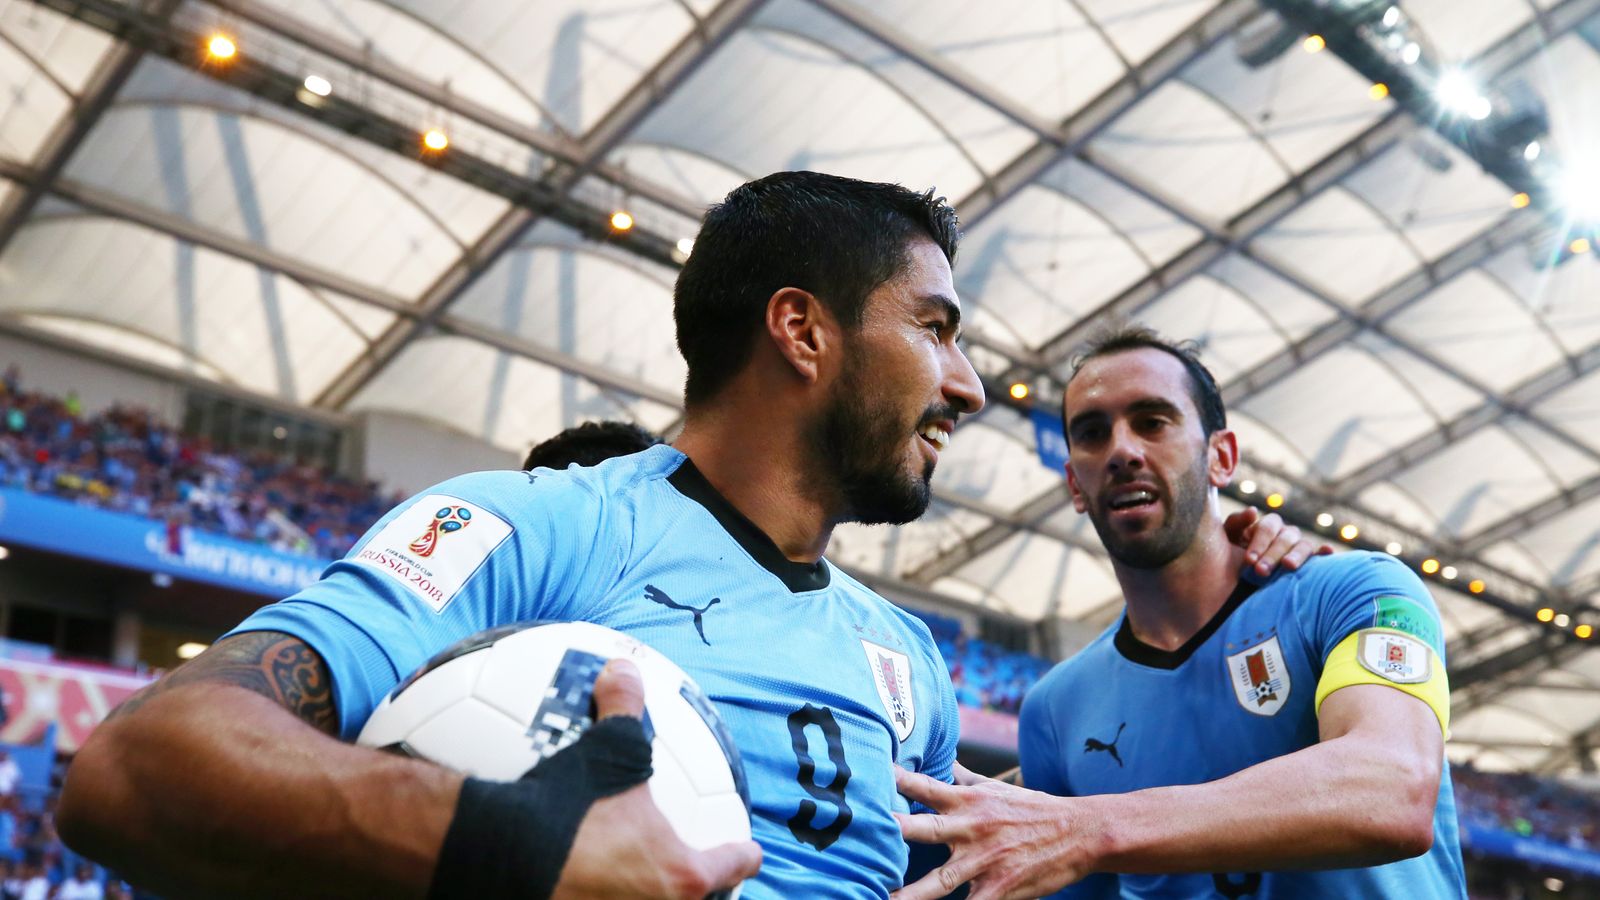 Uruguay 1-0 Saudi Arabia: Luis Suarez winner seals World Cup last-16 spot, Football News